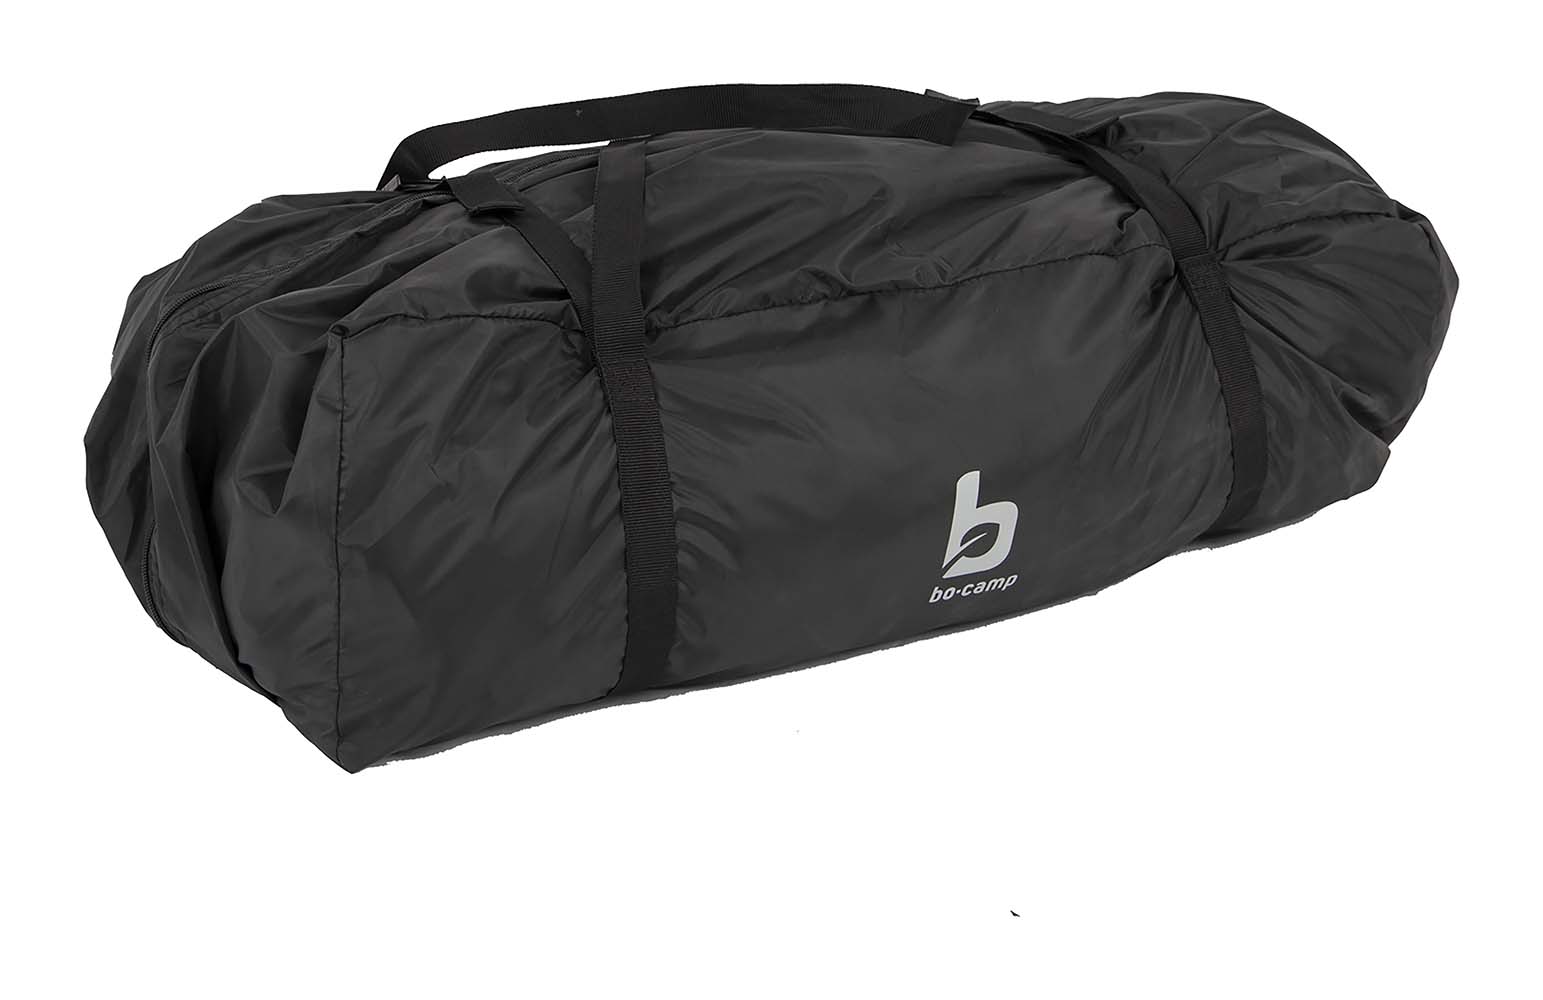 Bo-Camp - Storage tent - Medium - Air - Inflatable detail 2